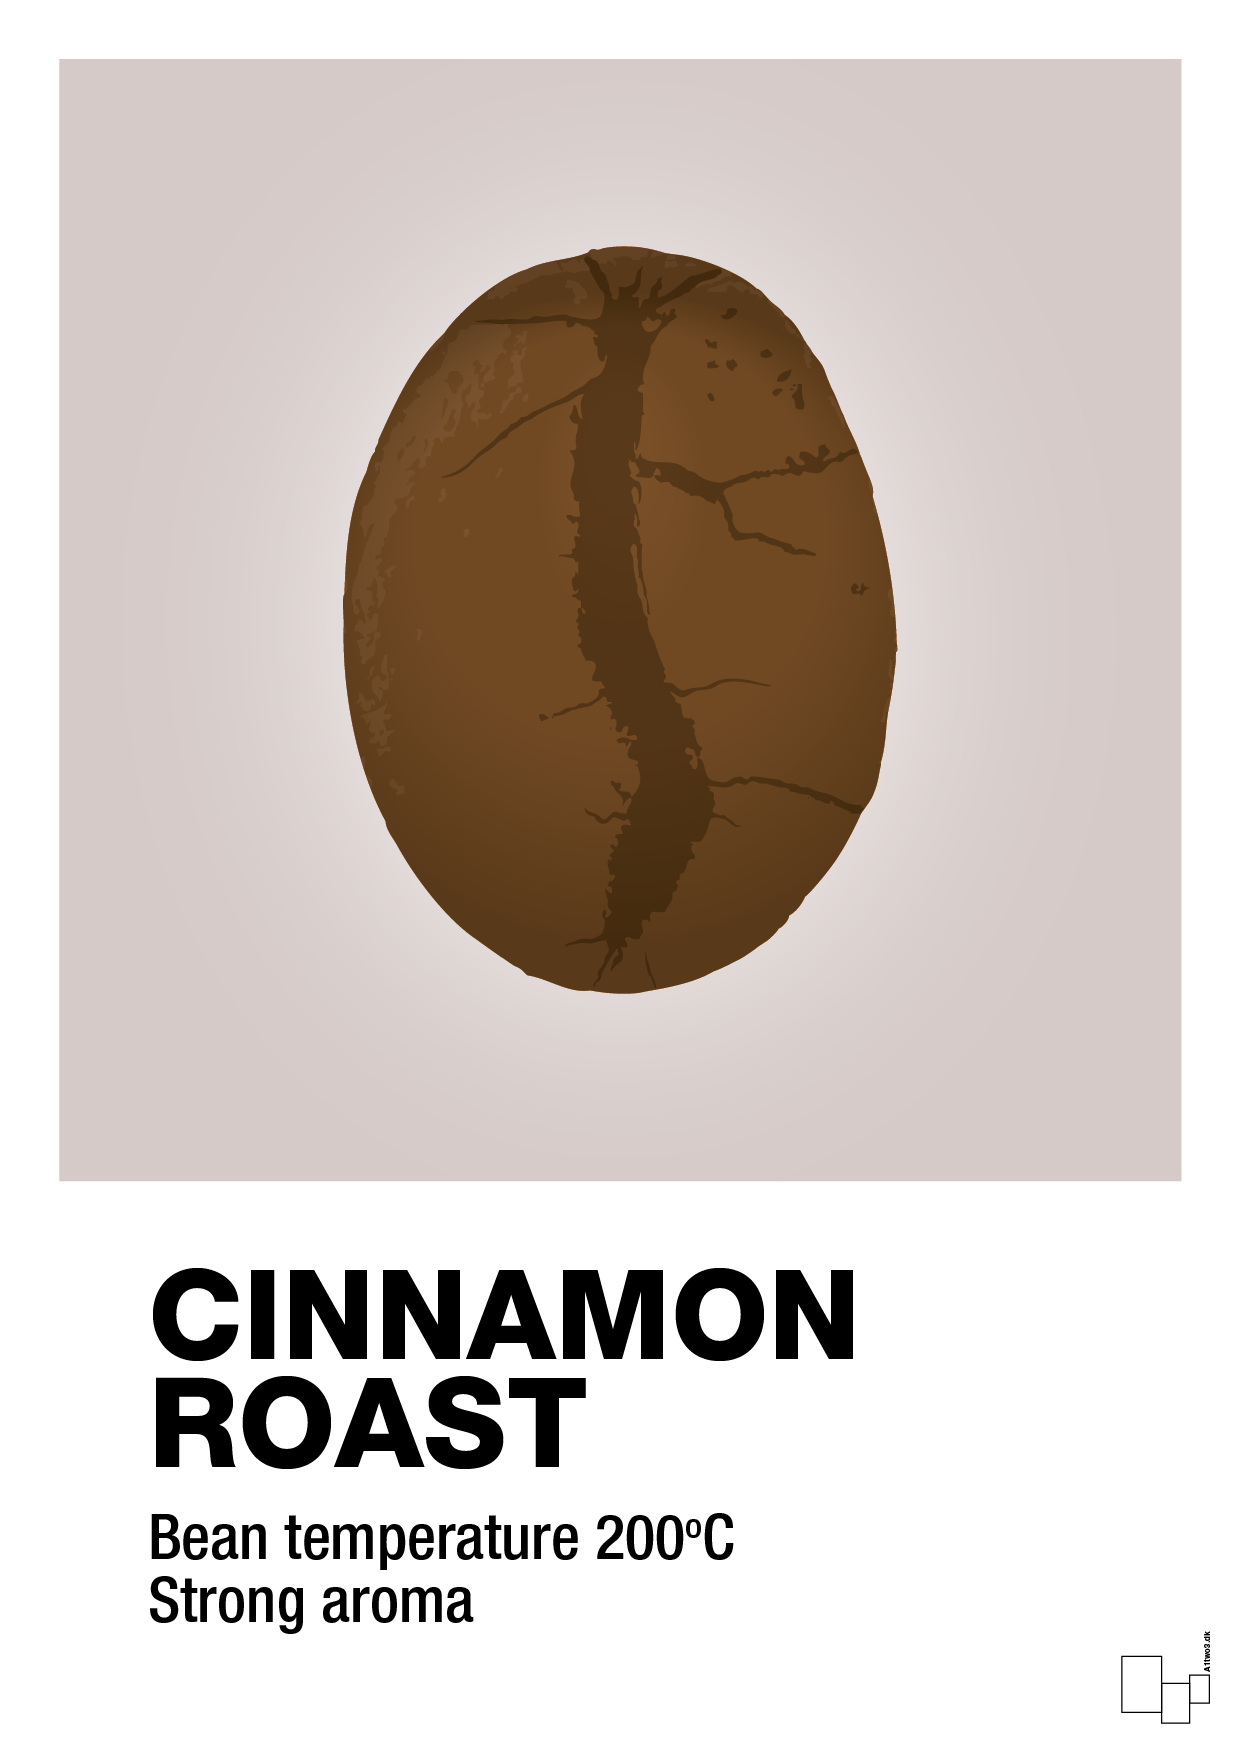 cinnamom roast - Plakat med Mad & Drikke i Broken Beige